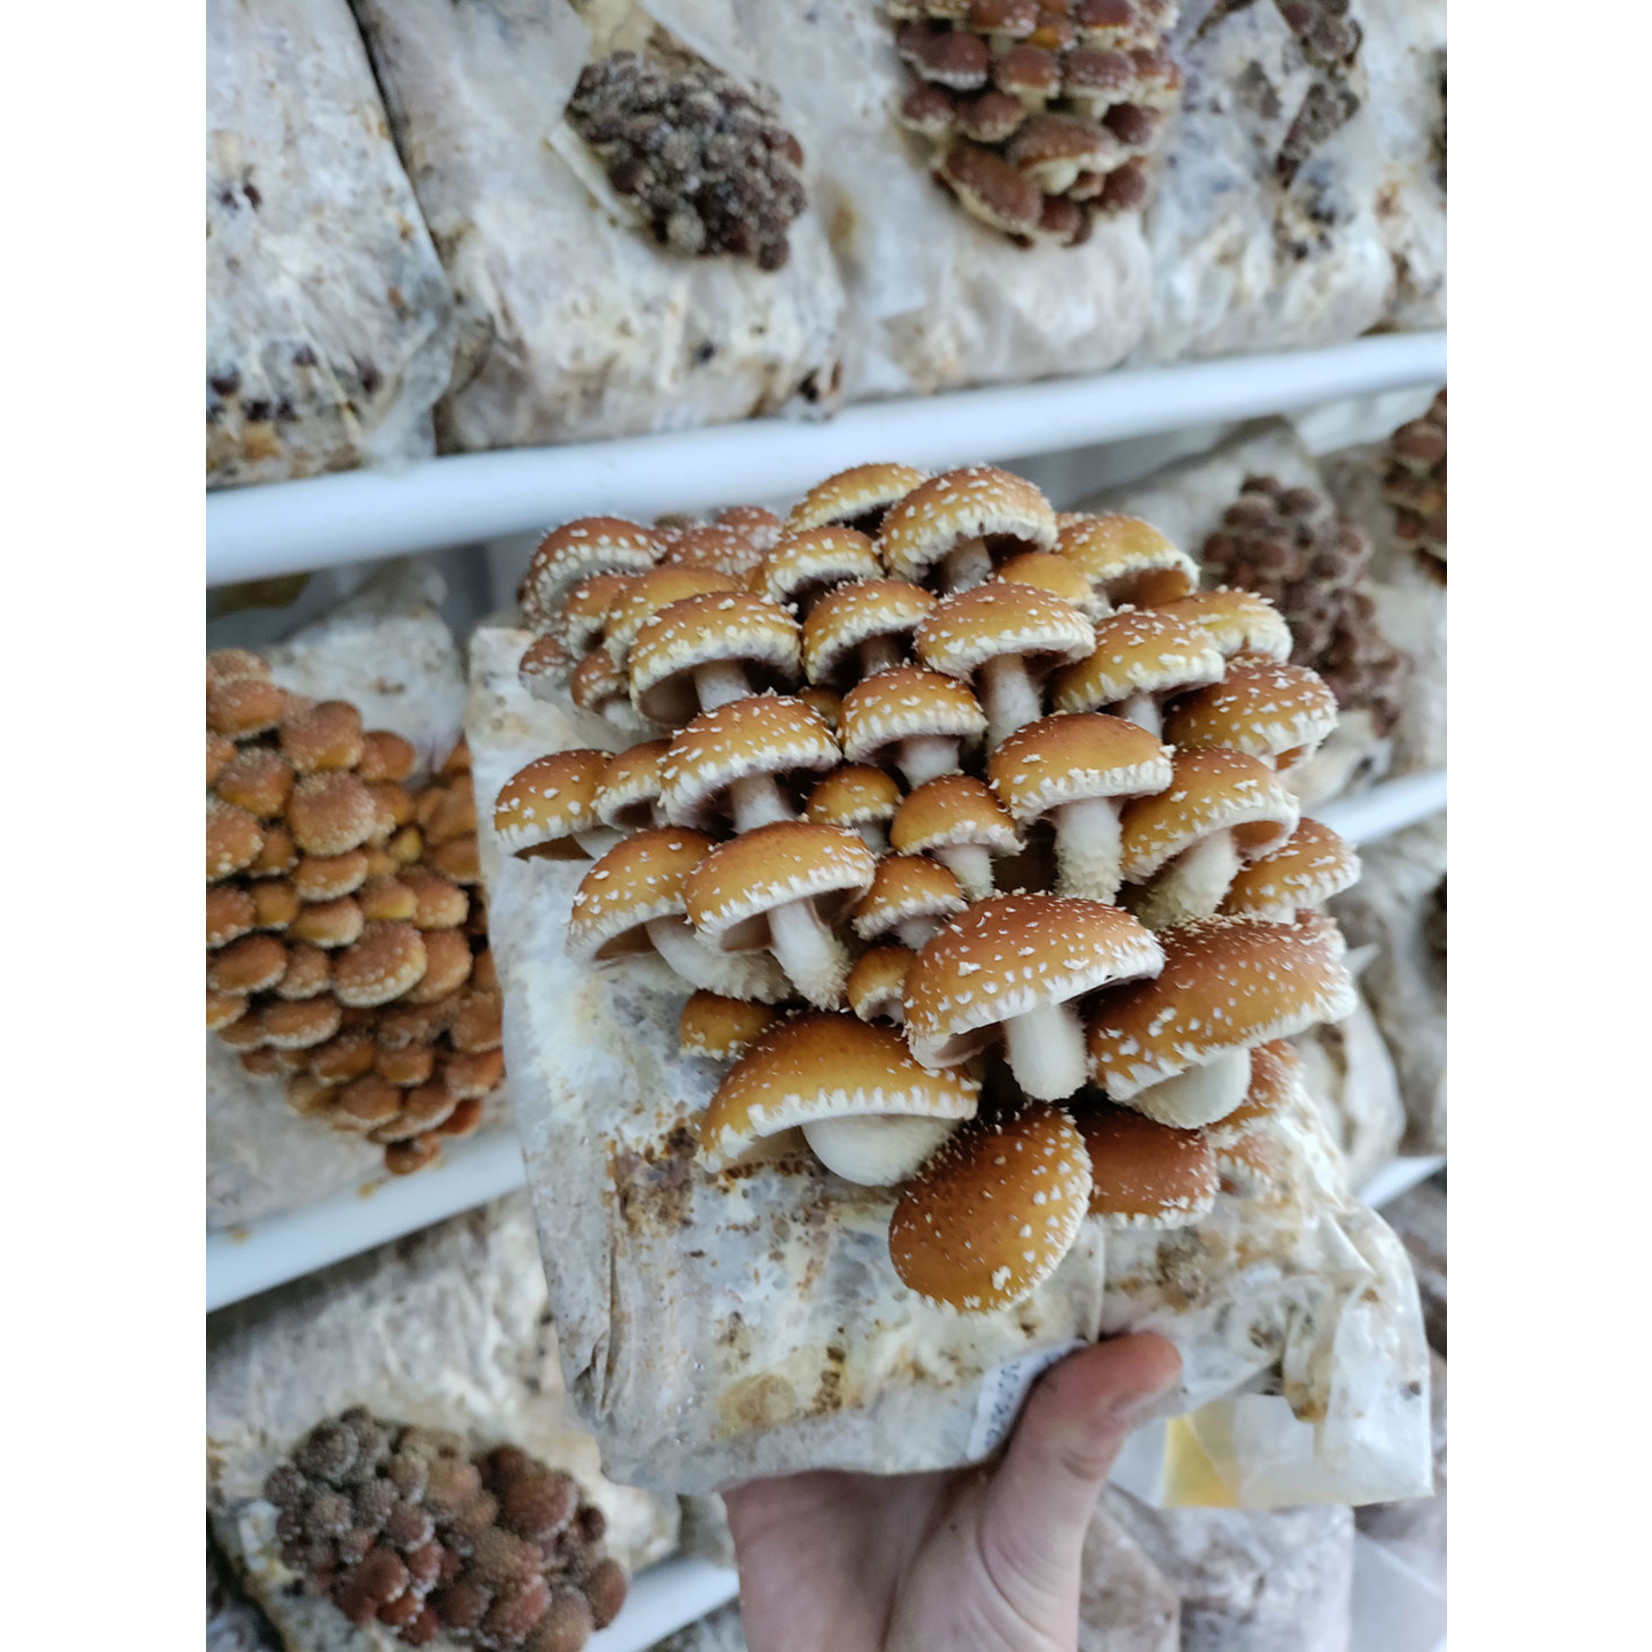 Foragers Galley Chestnut Mushroom Grow Kit